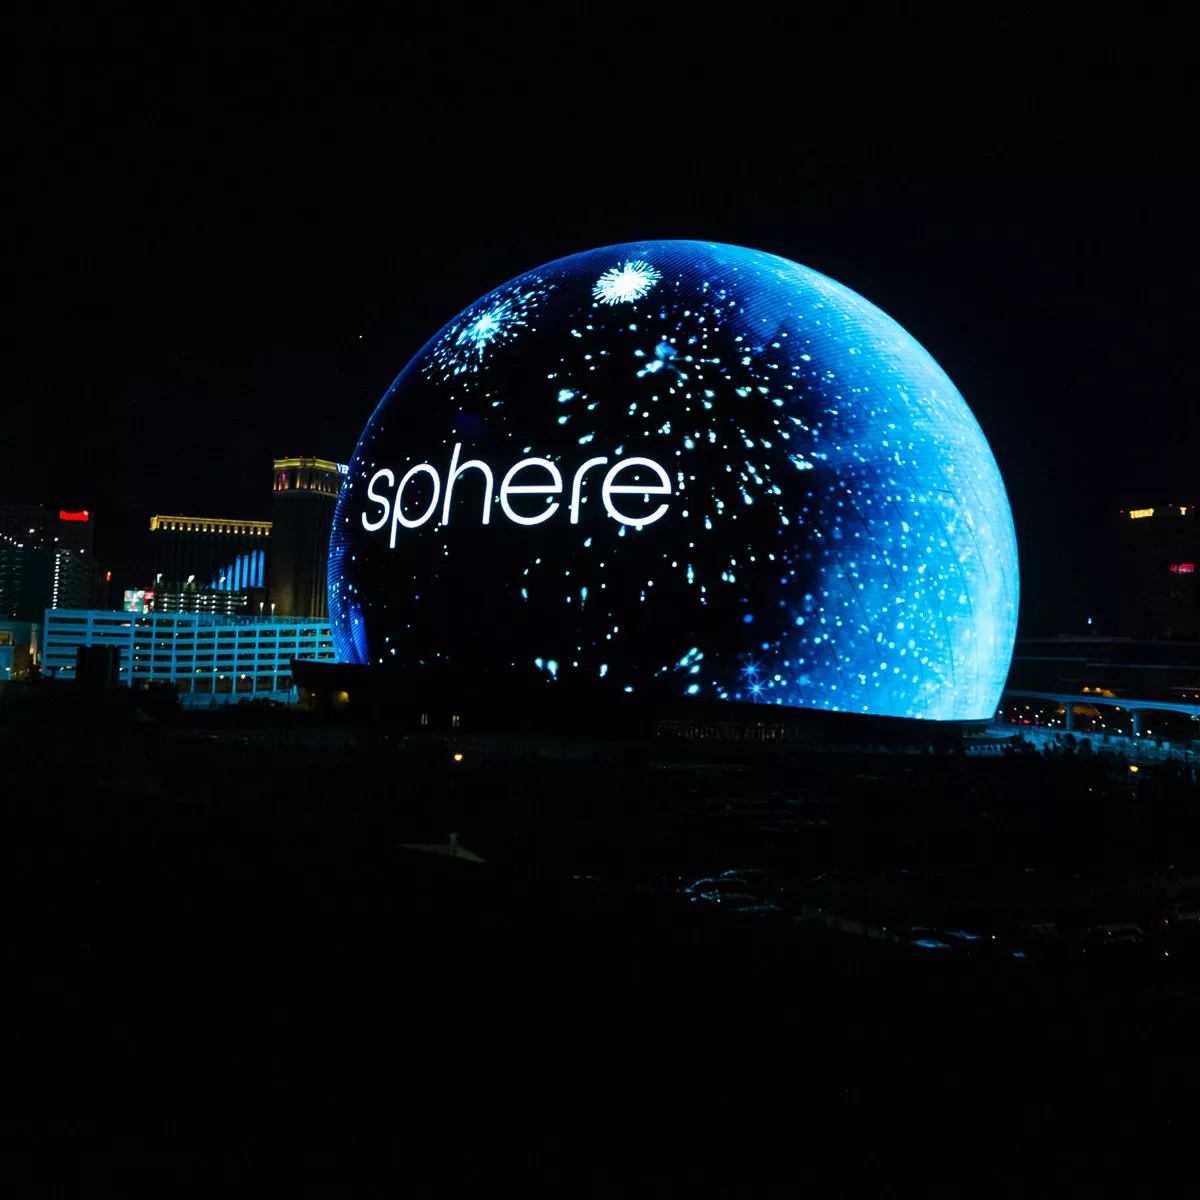 The Sphere in Las Vegas mit dem Schriftzug "Sphere"